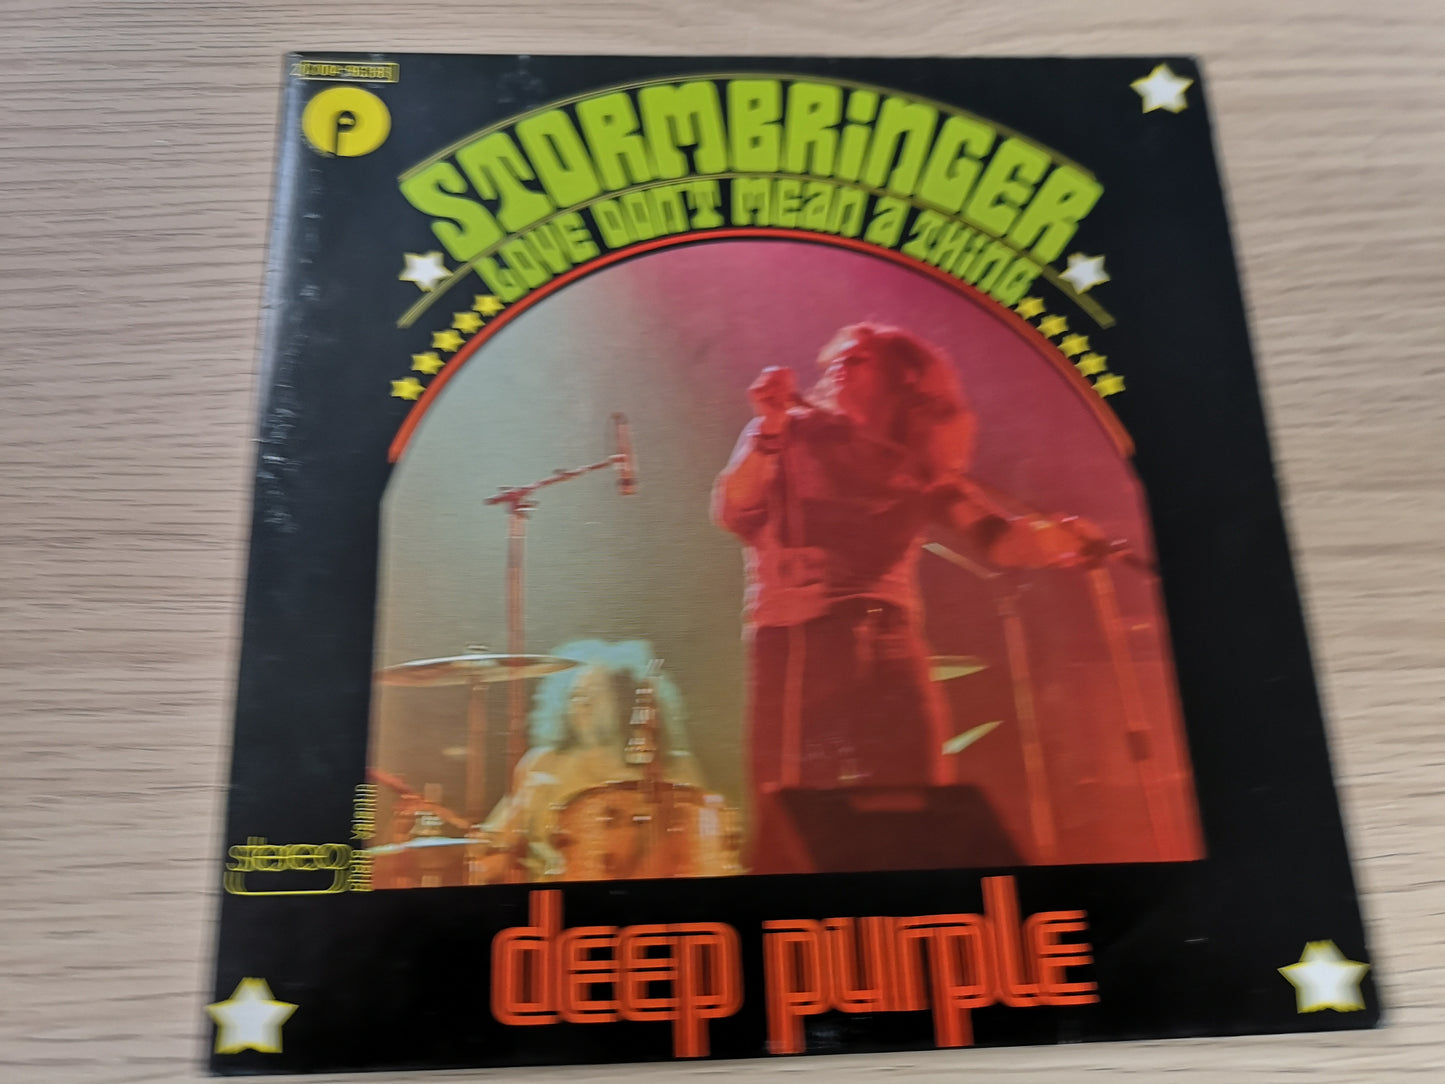 Deep Purple "Stormbringer" Orig France 1975 M-/M- (7" Single)